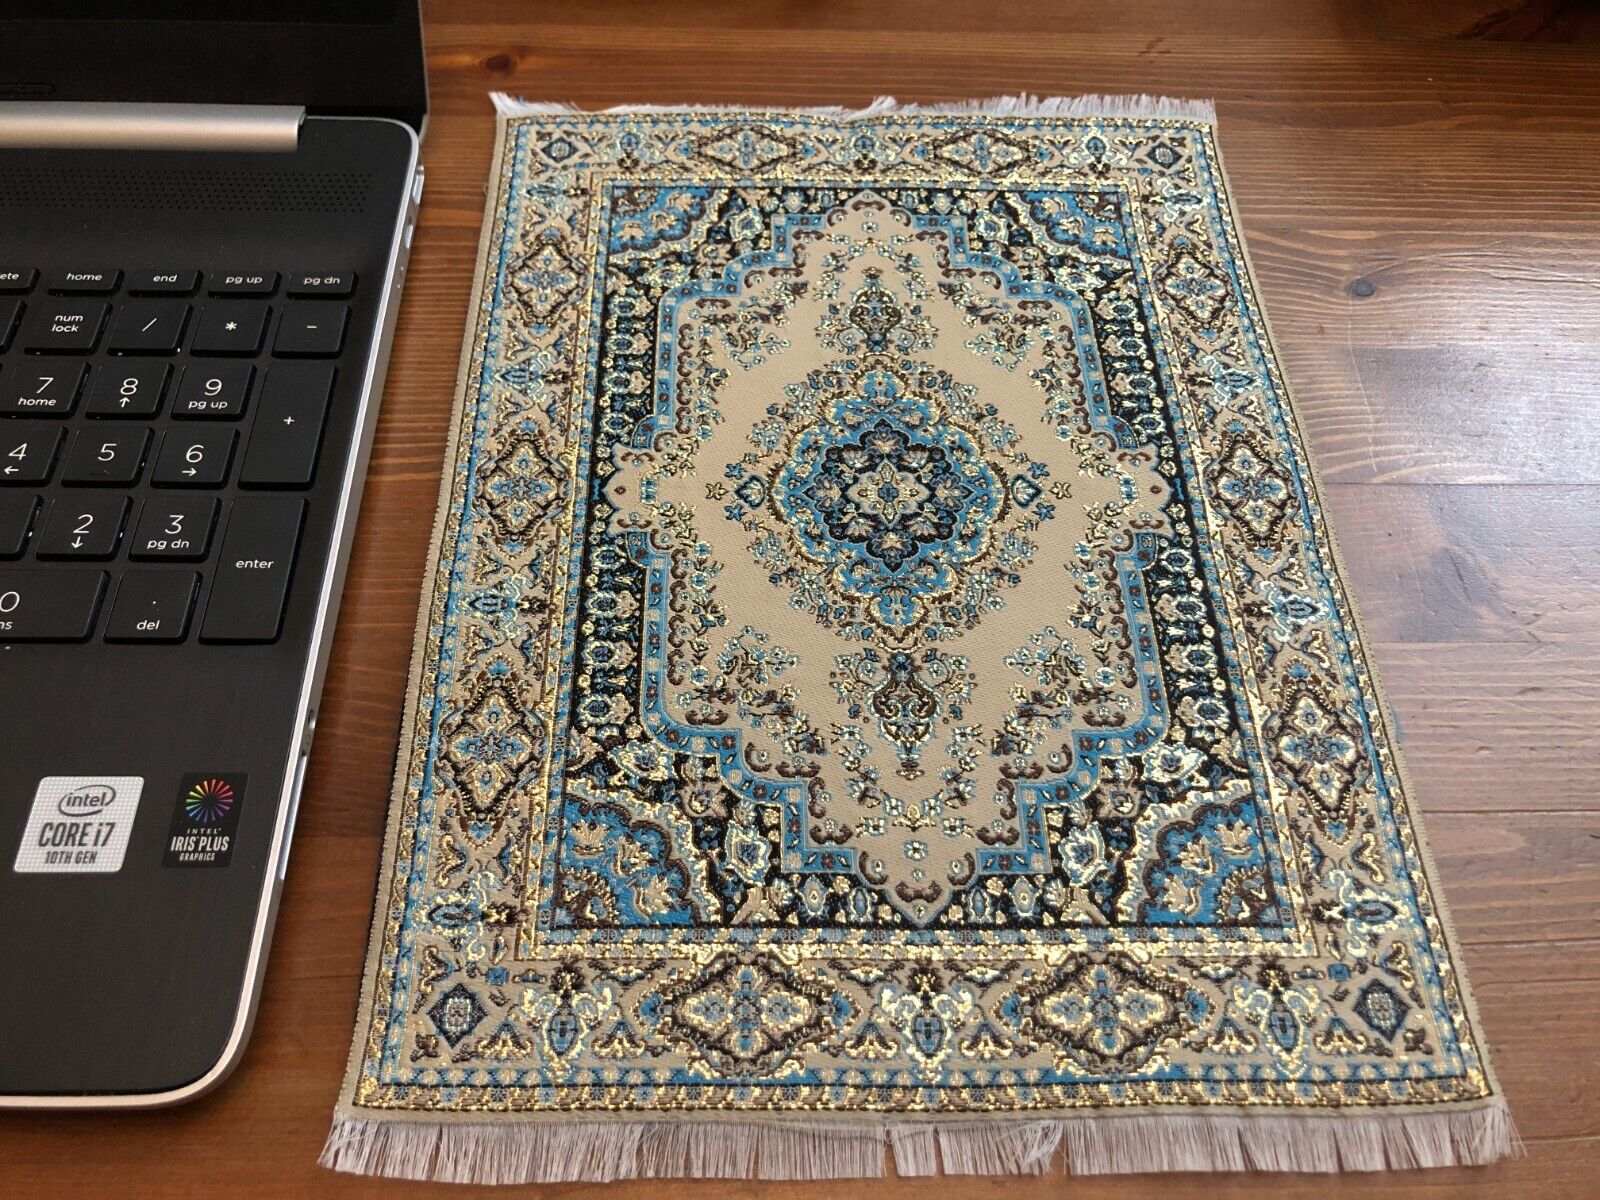 Woven Mouse Pad - Turkish Carpet Design